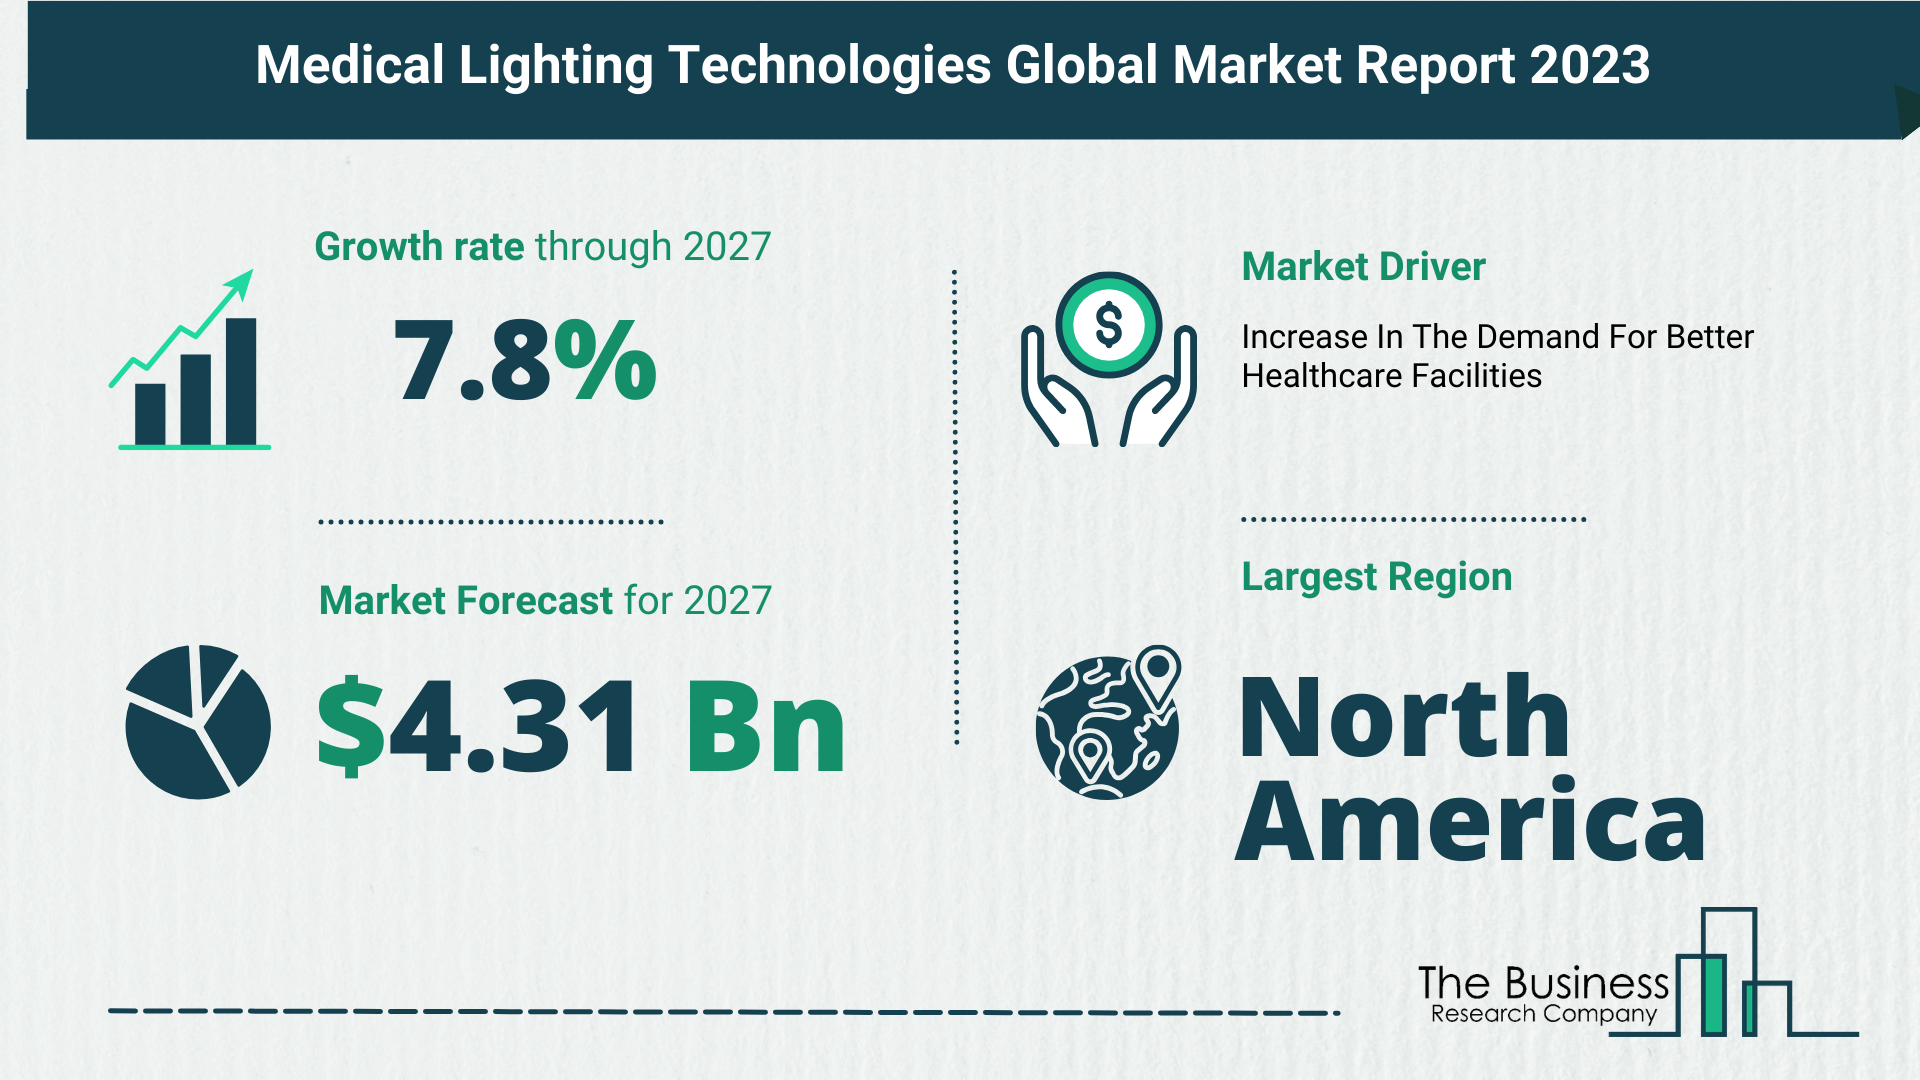 Global Medical Lighting Technologies Market